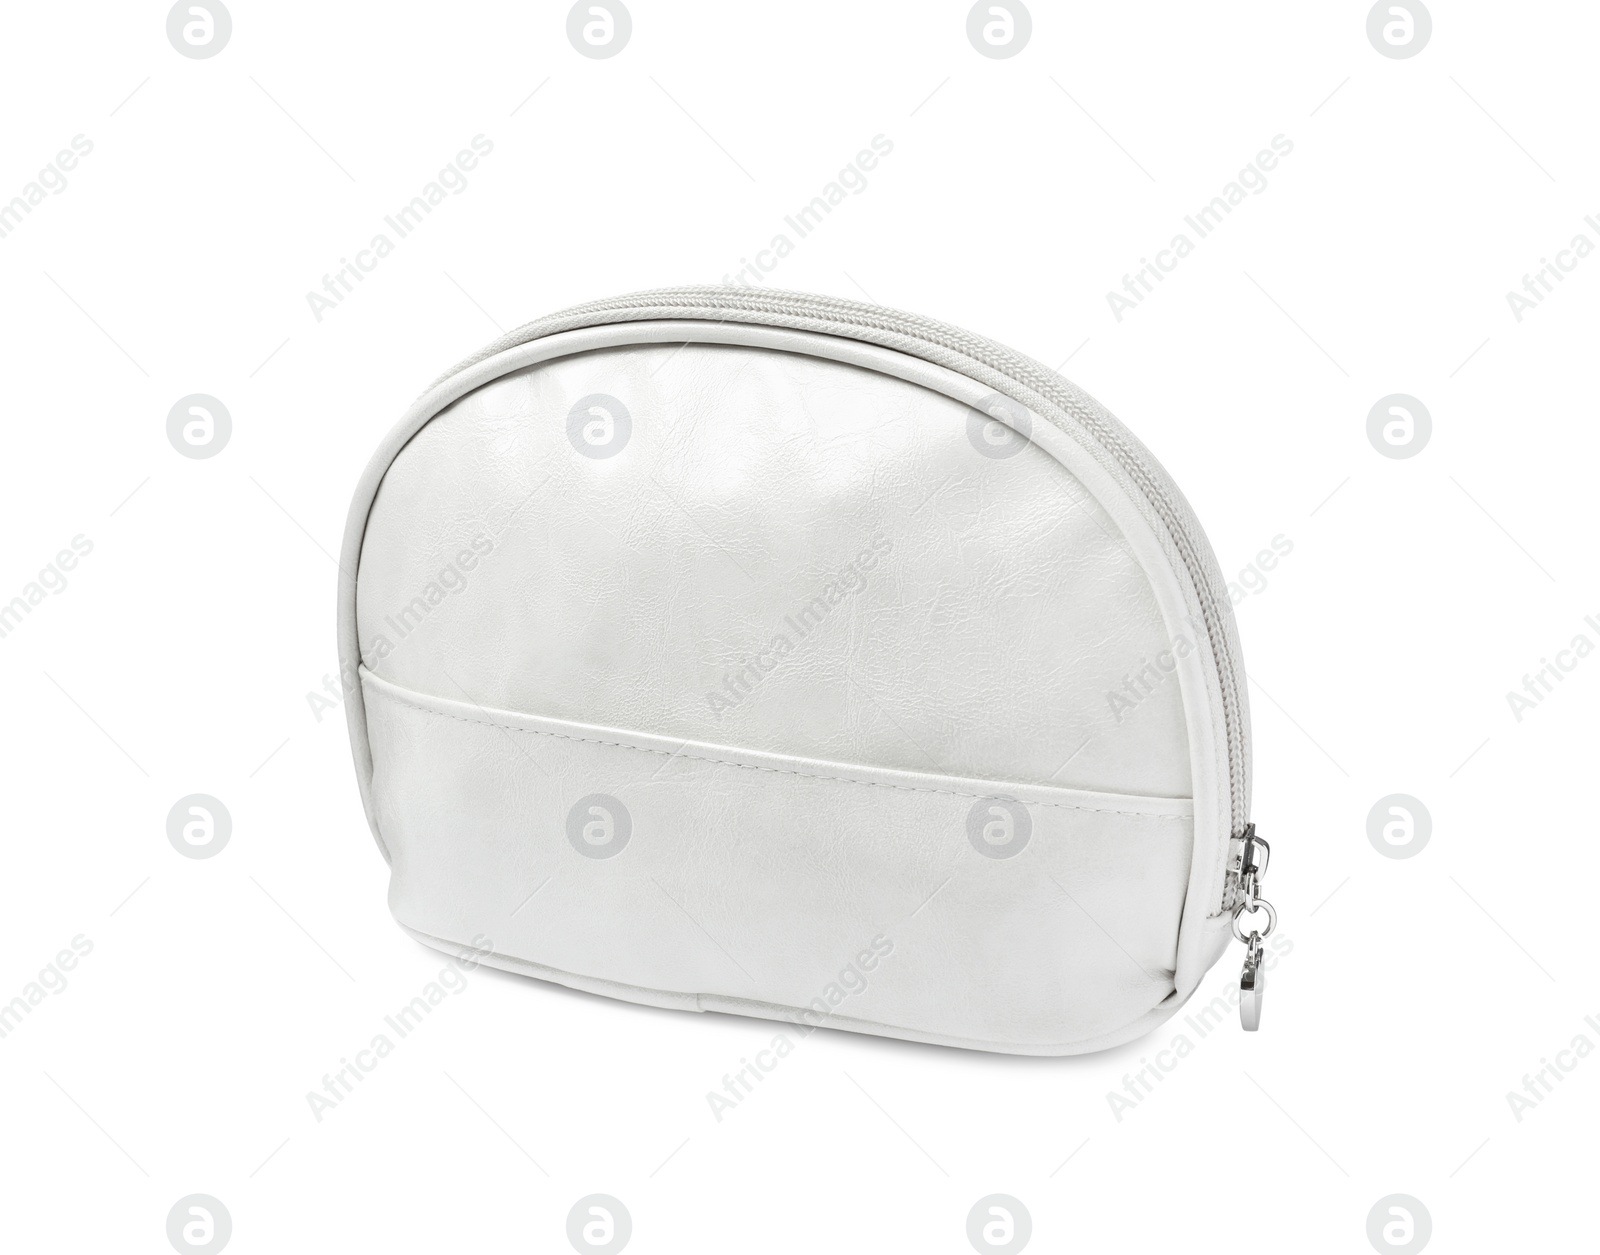 Photo of Light elegant cosmetic bag isolated on white